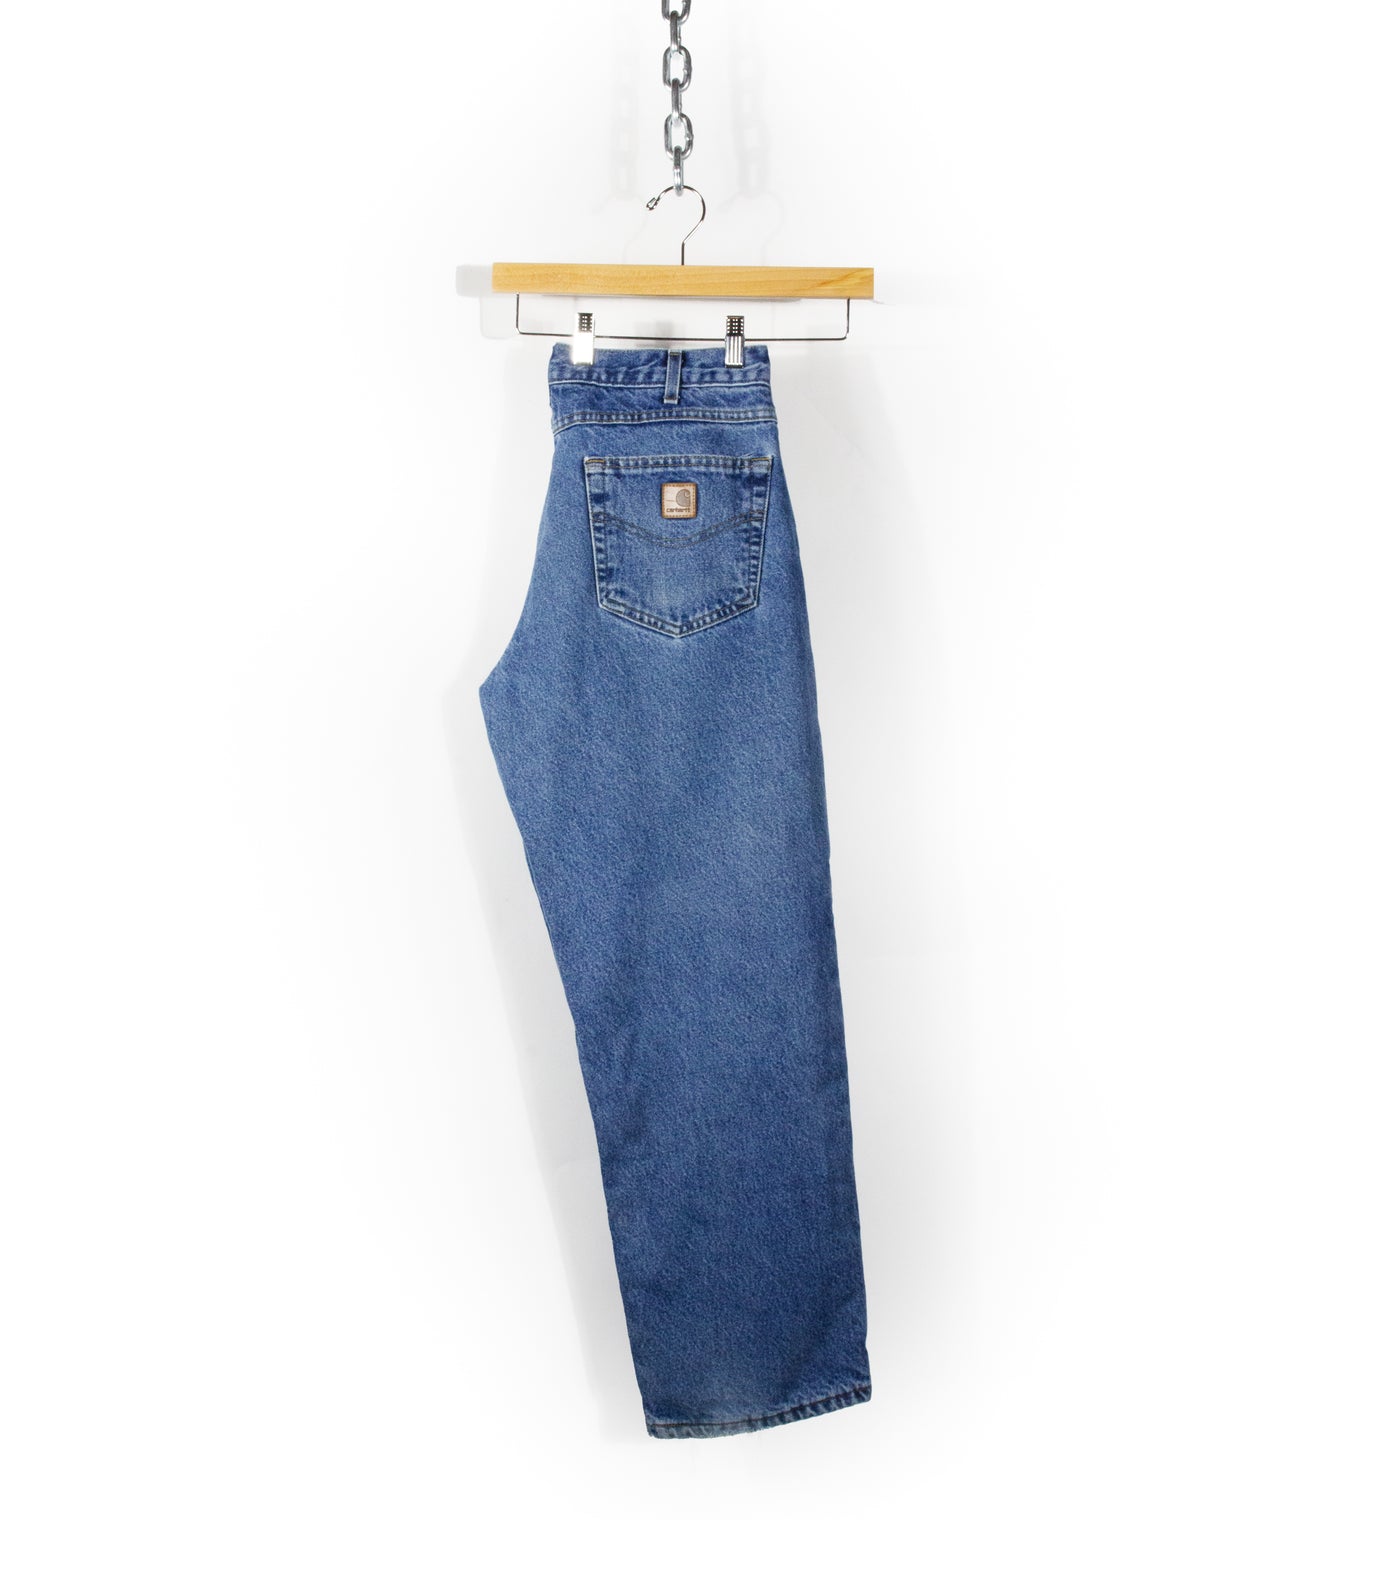 Vintage Flannel Lined Carhartt Denim Jeans - Size 32